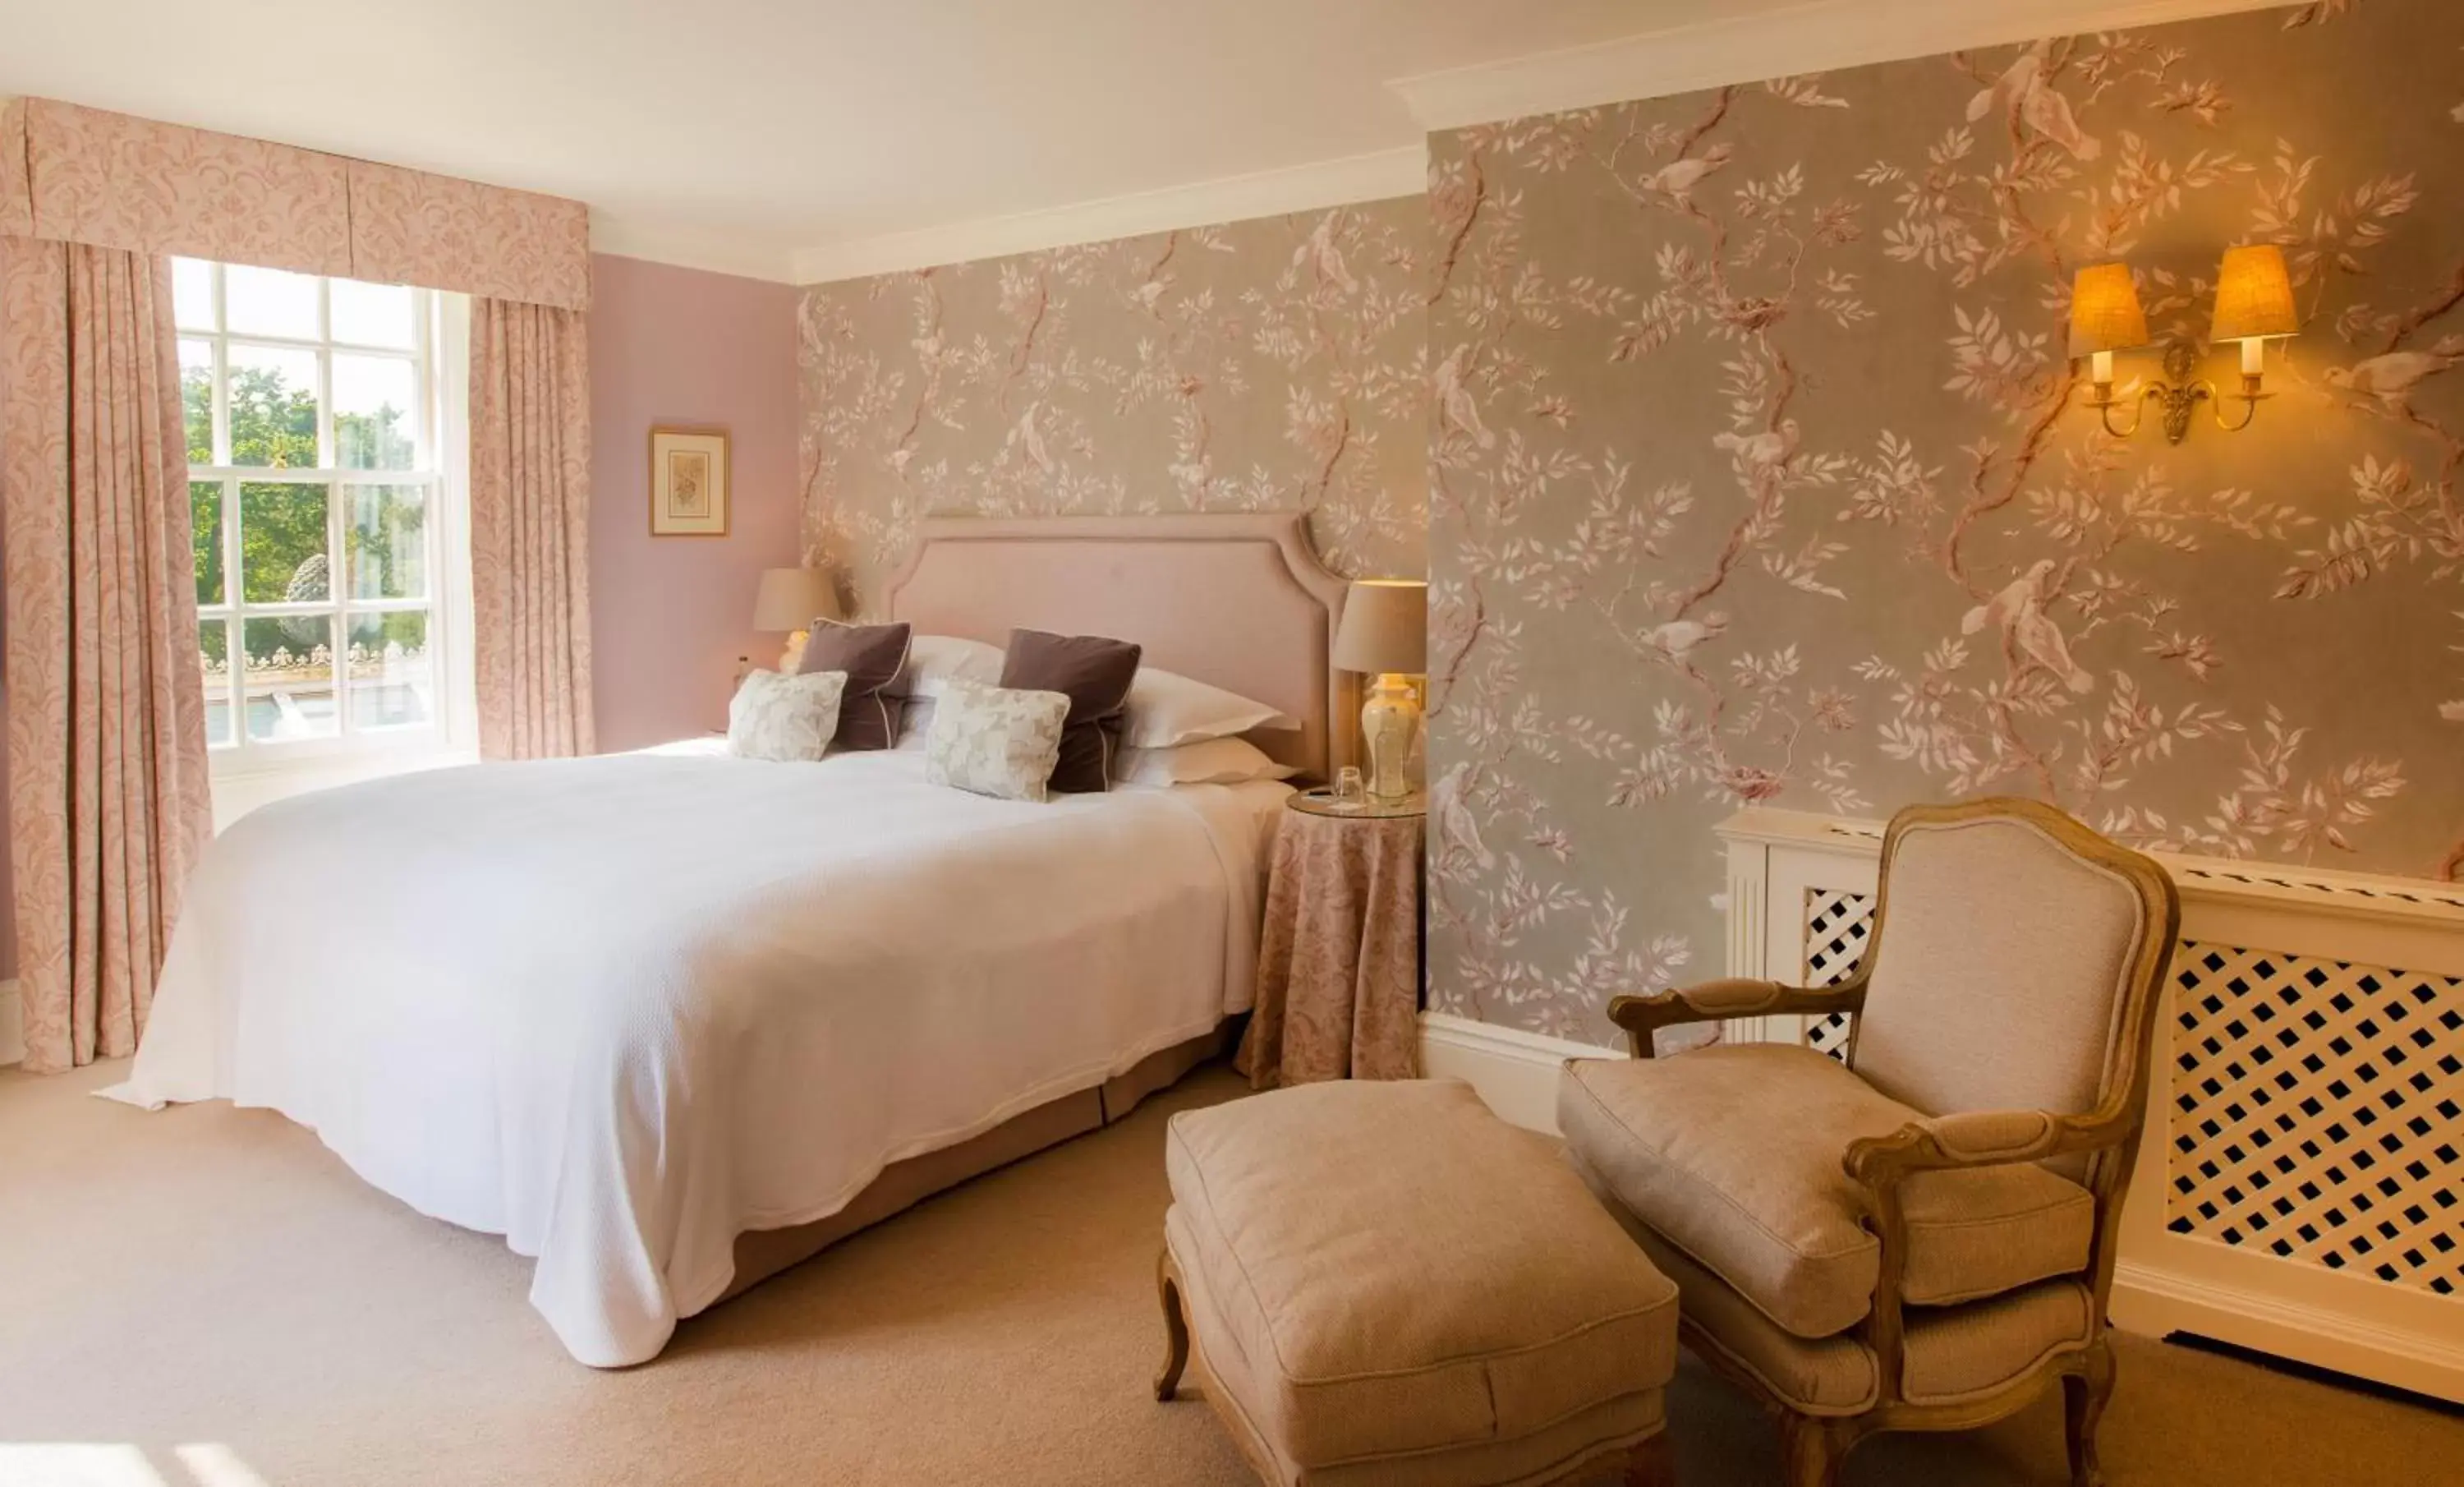 Day, Room Photo in Chewton Glen Hotel - an Iconic Luxury Hotel